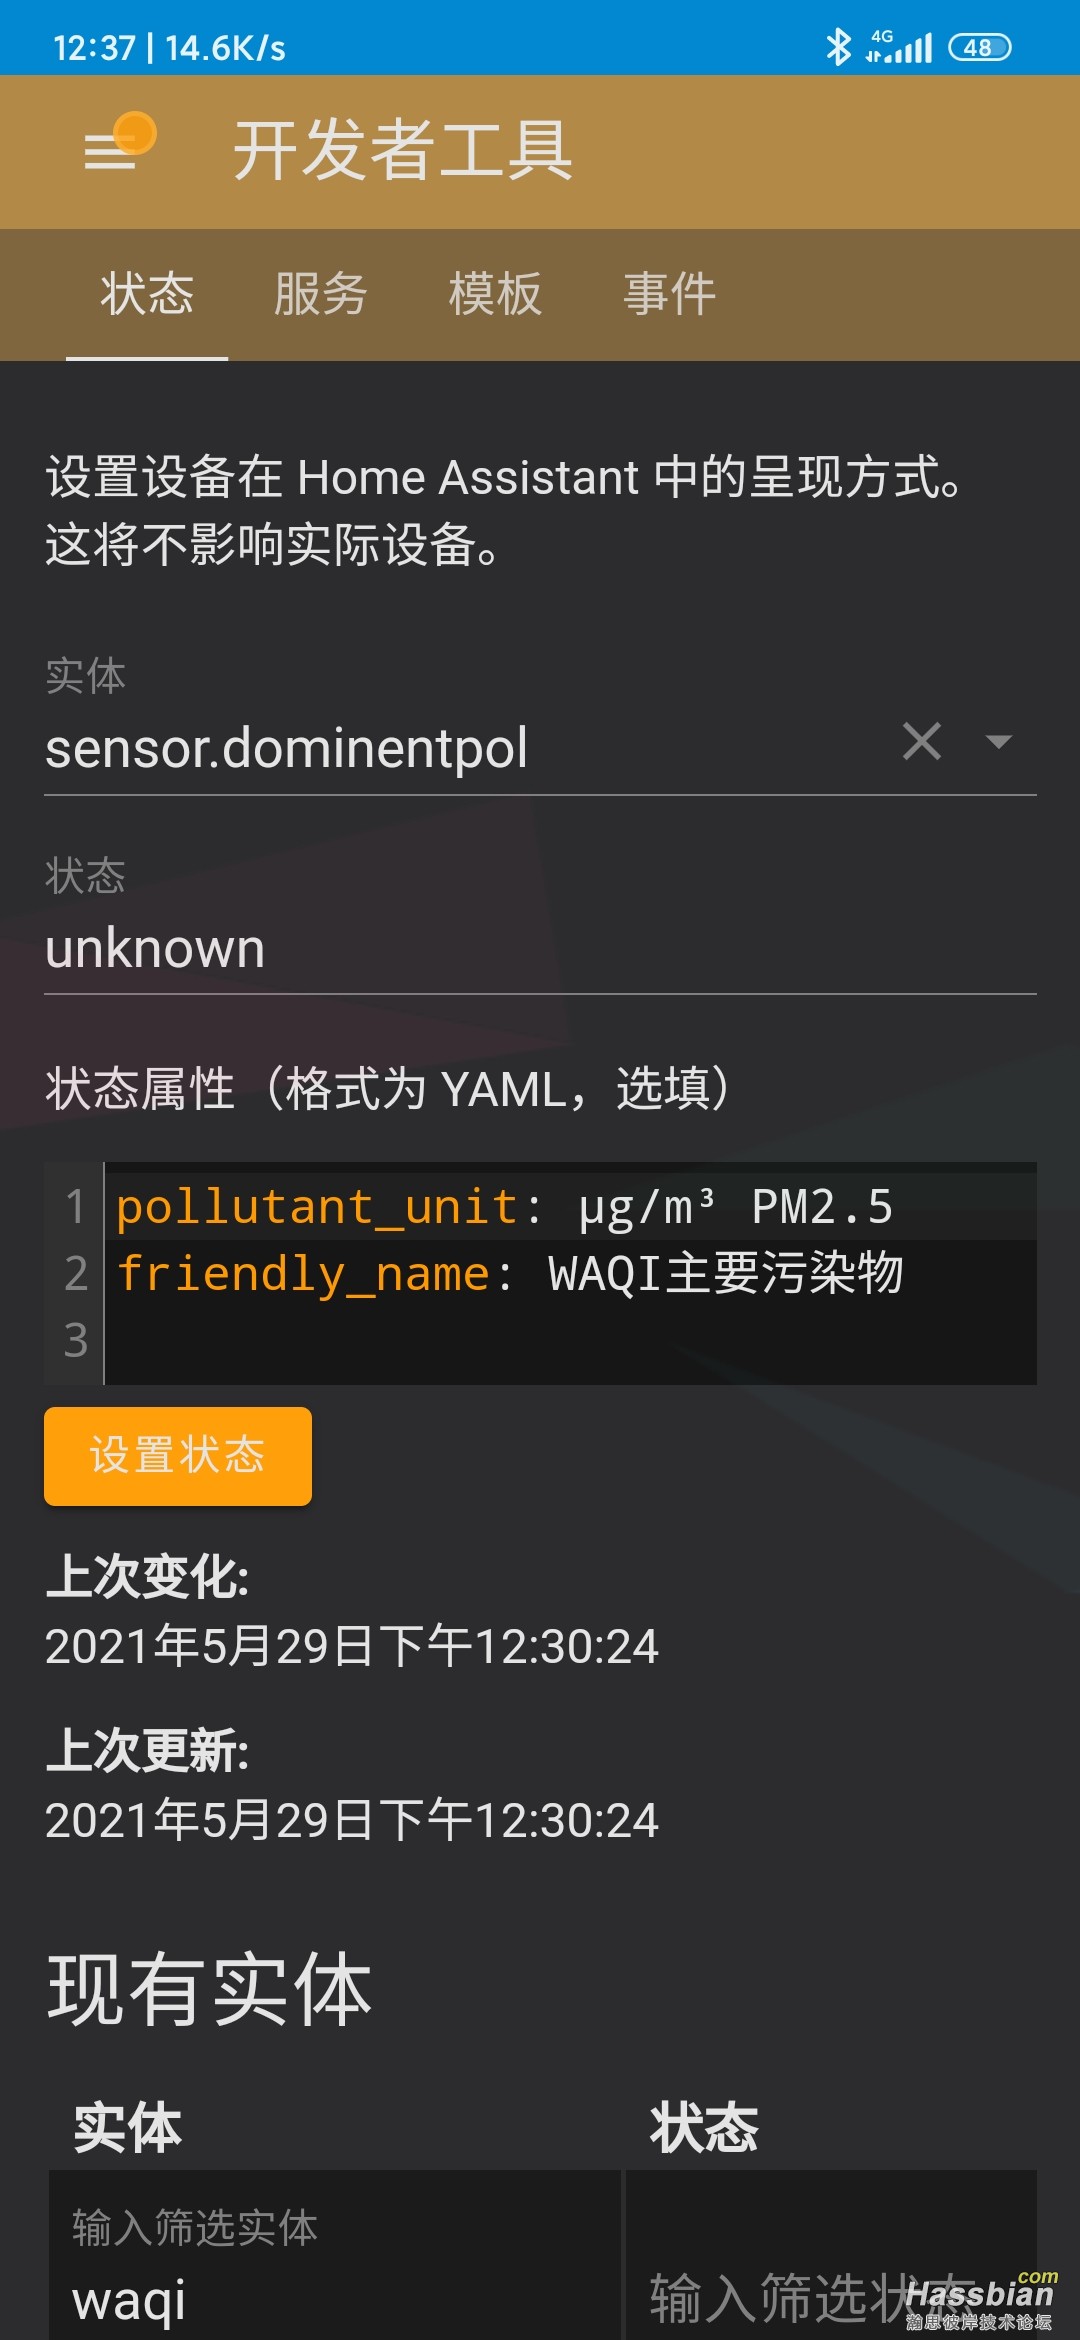 Screenshot_2021-05-29-12-37-22-212_io.homeassistant.companion.android.jpg